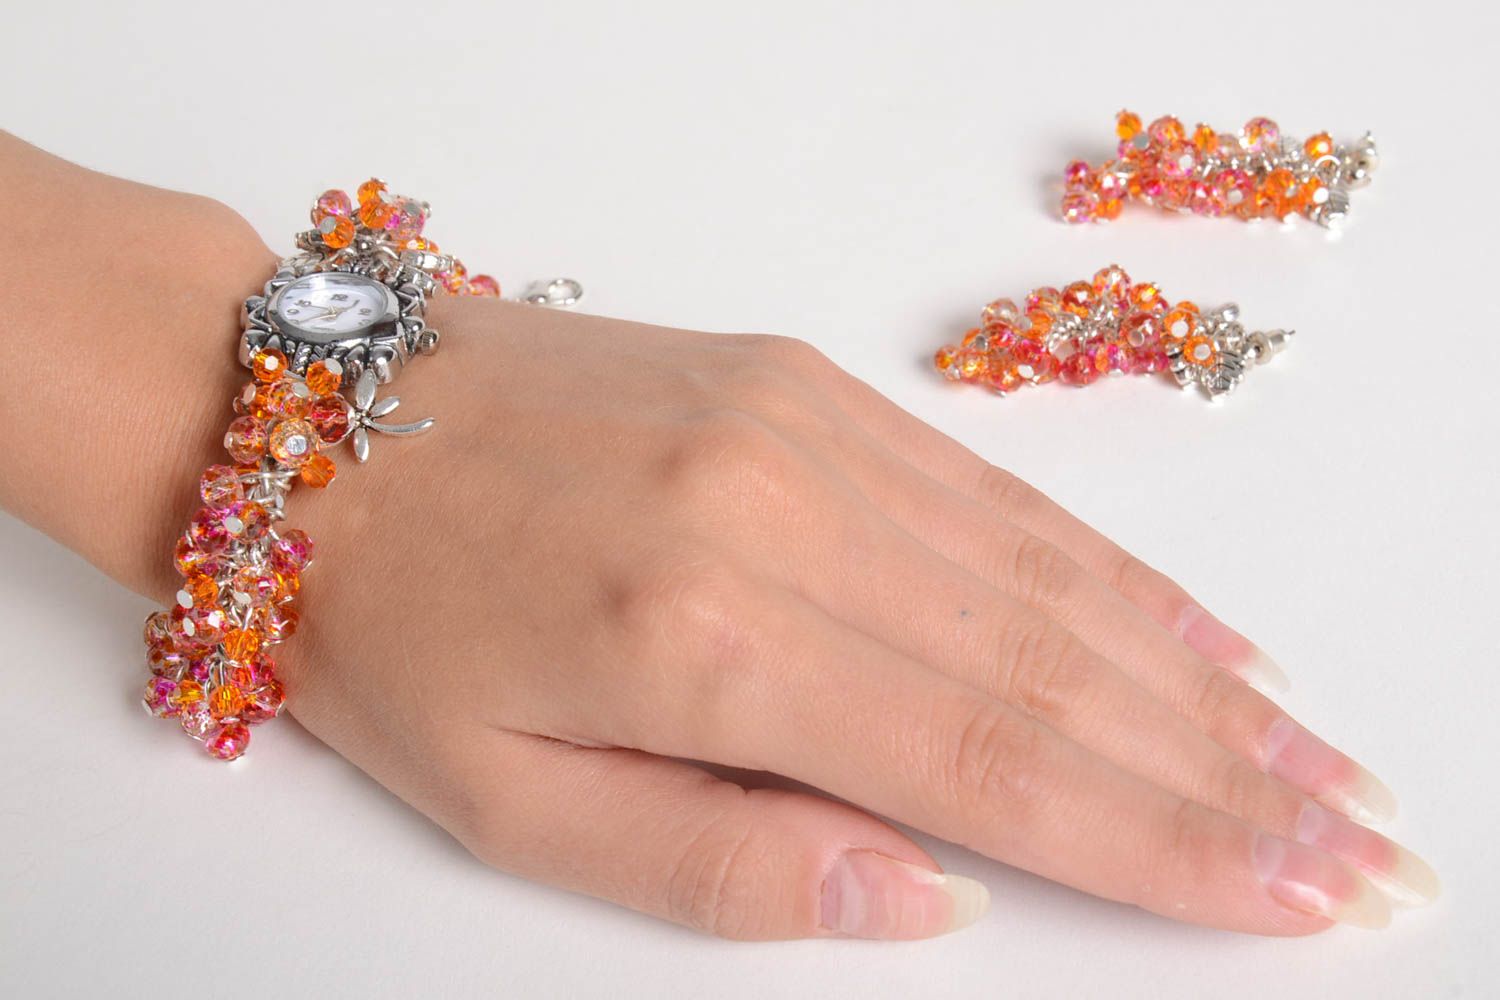 Unusual handmade beaded earrings wrist watch bacelet designs gifts for her photo 2